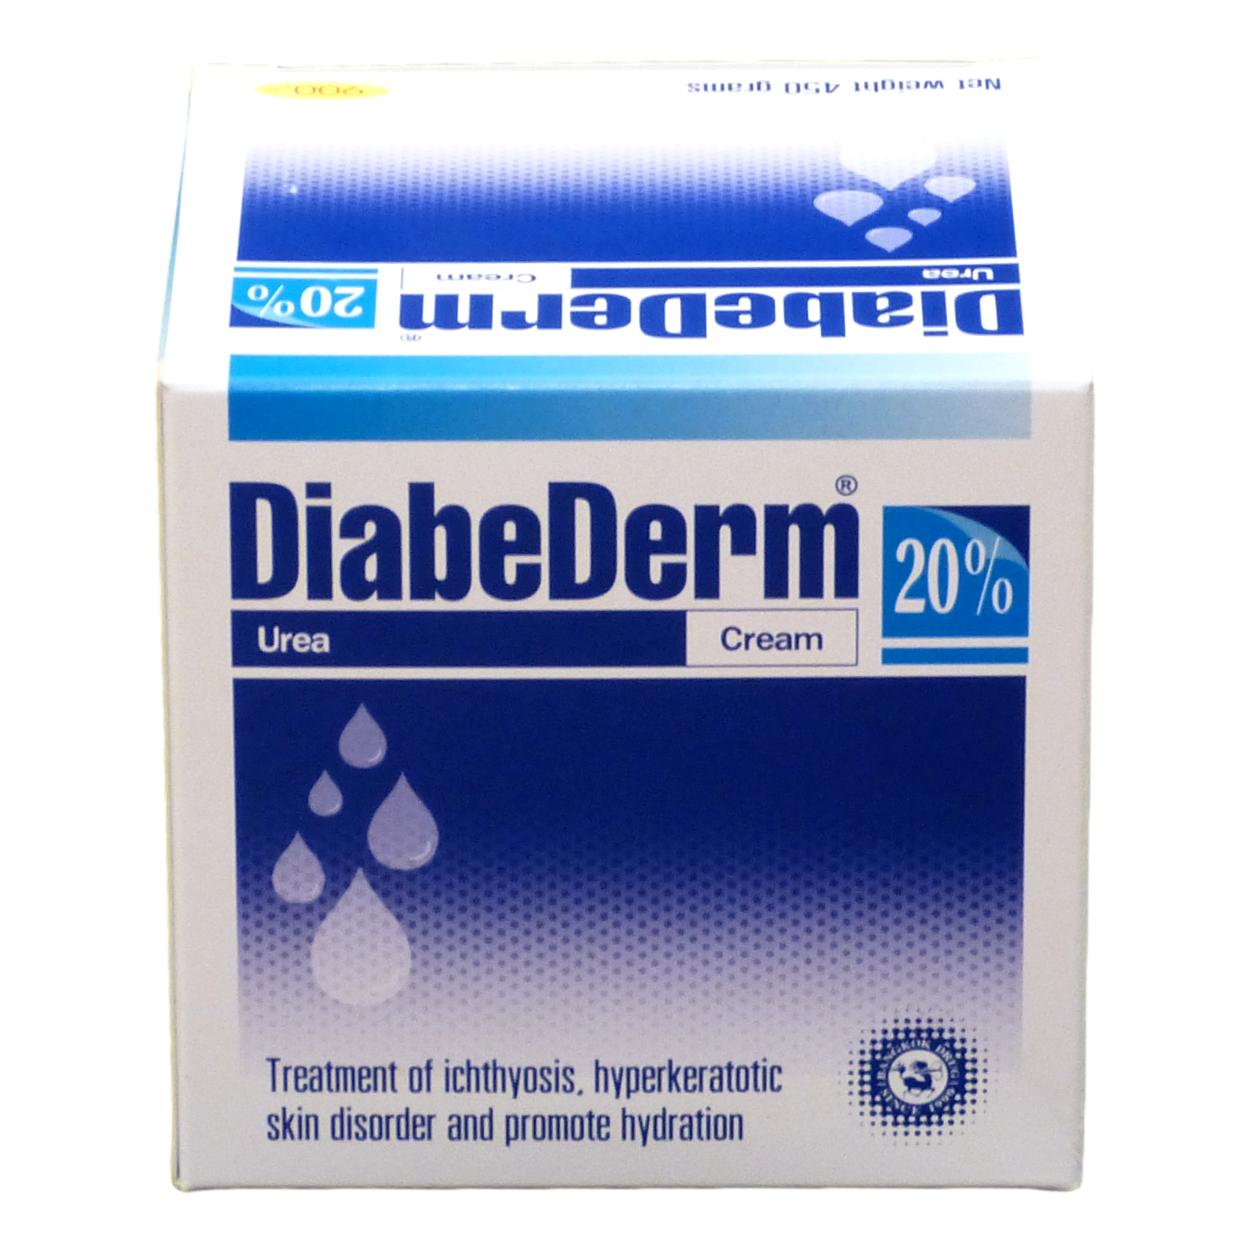 Diabederm 20% Urea Cream 450 grams